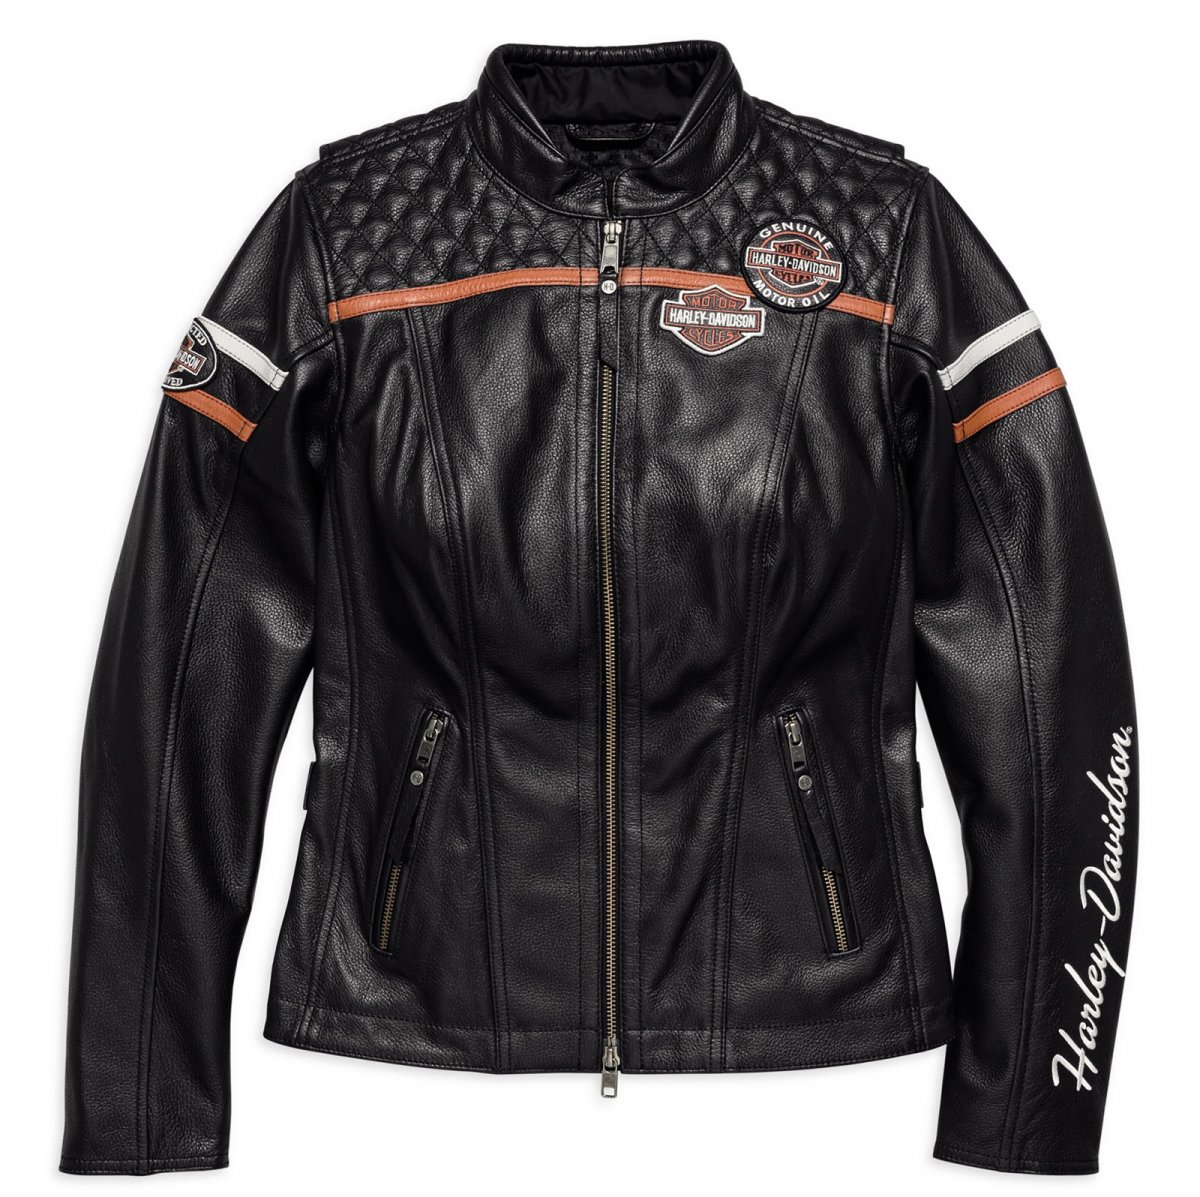 MISS ENTUSIAST LEATHER - Damer Caps Harley-Davidson